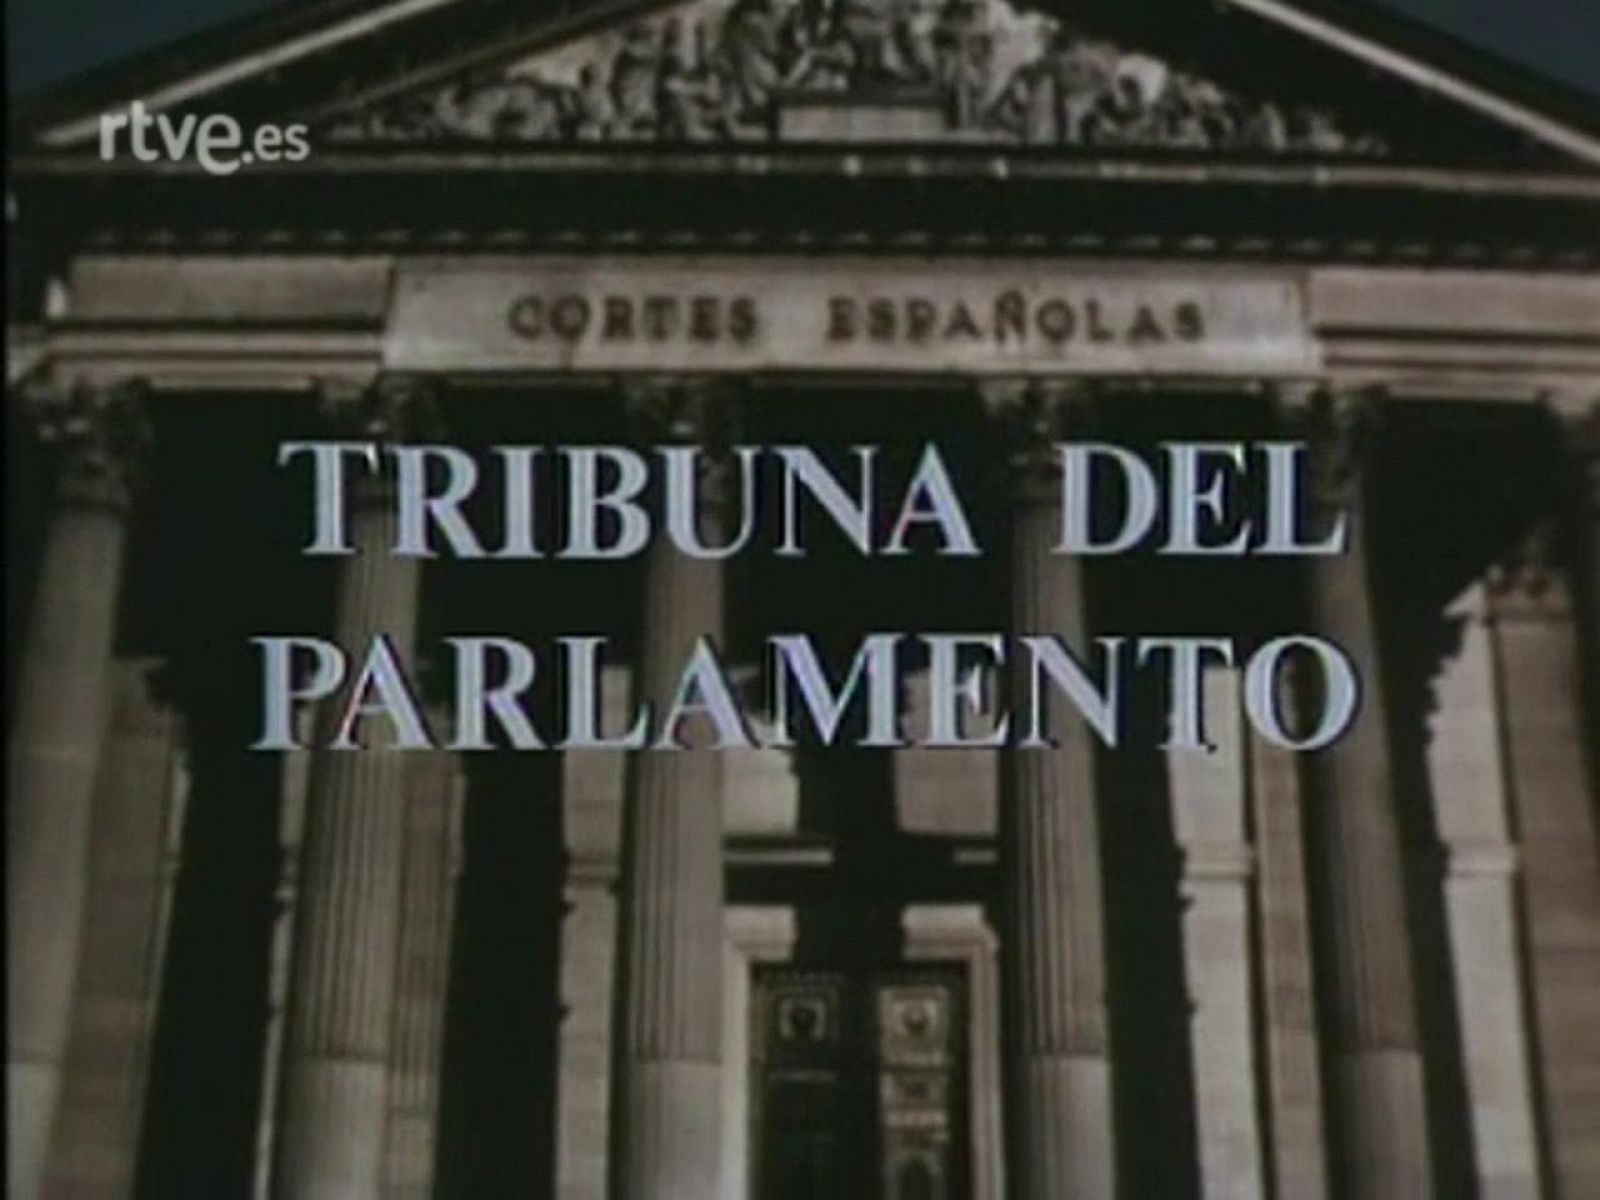 Parlamento: Primer programa de Tribuna del Parlamento - 17/04/1978 | RTVE Play